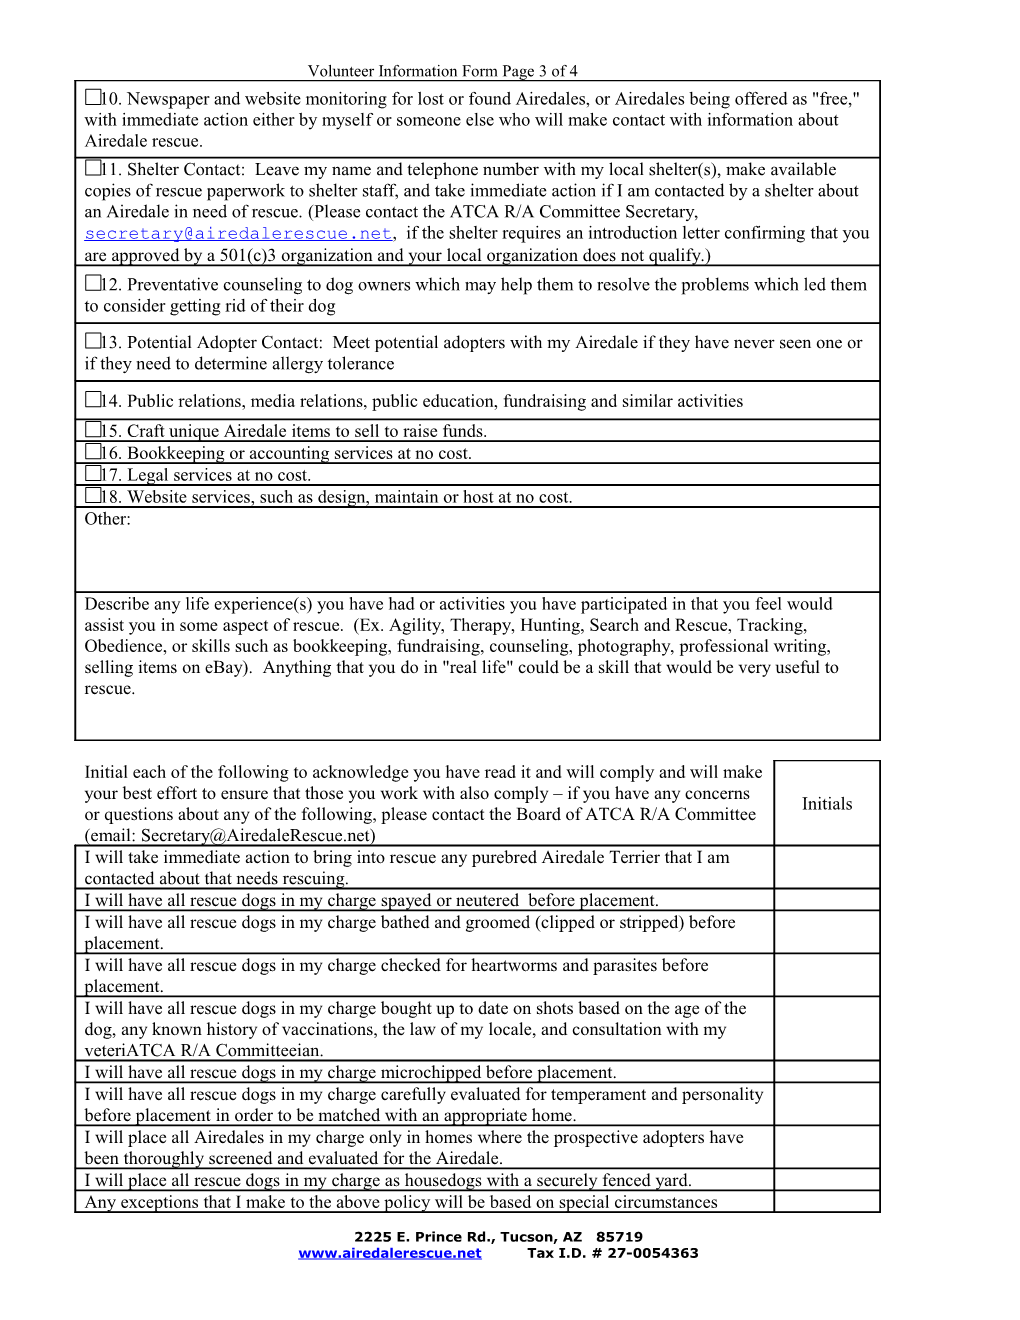 Volunteer Information Form Page 4 of 4